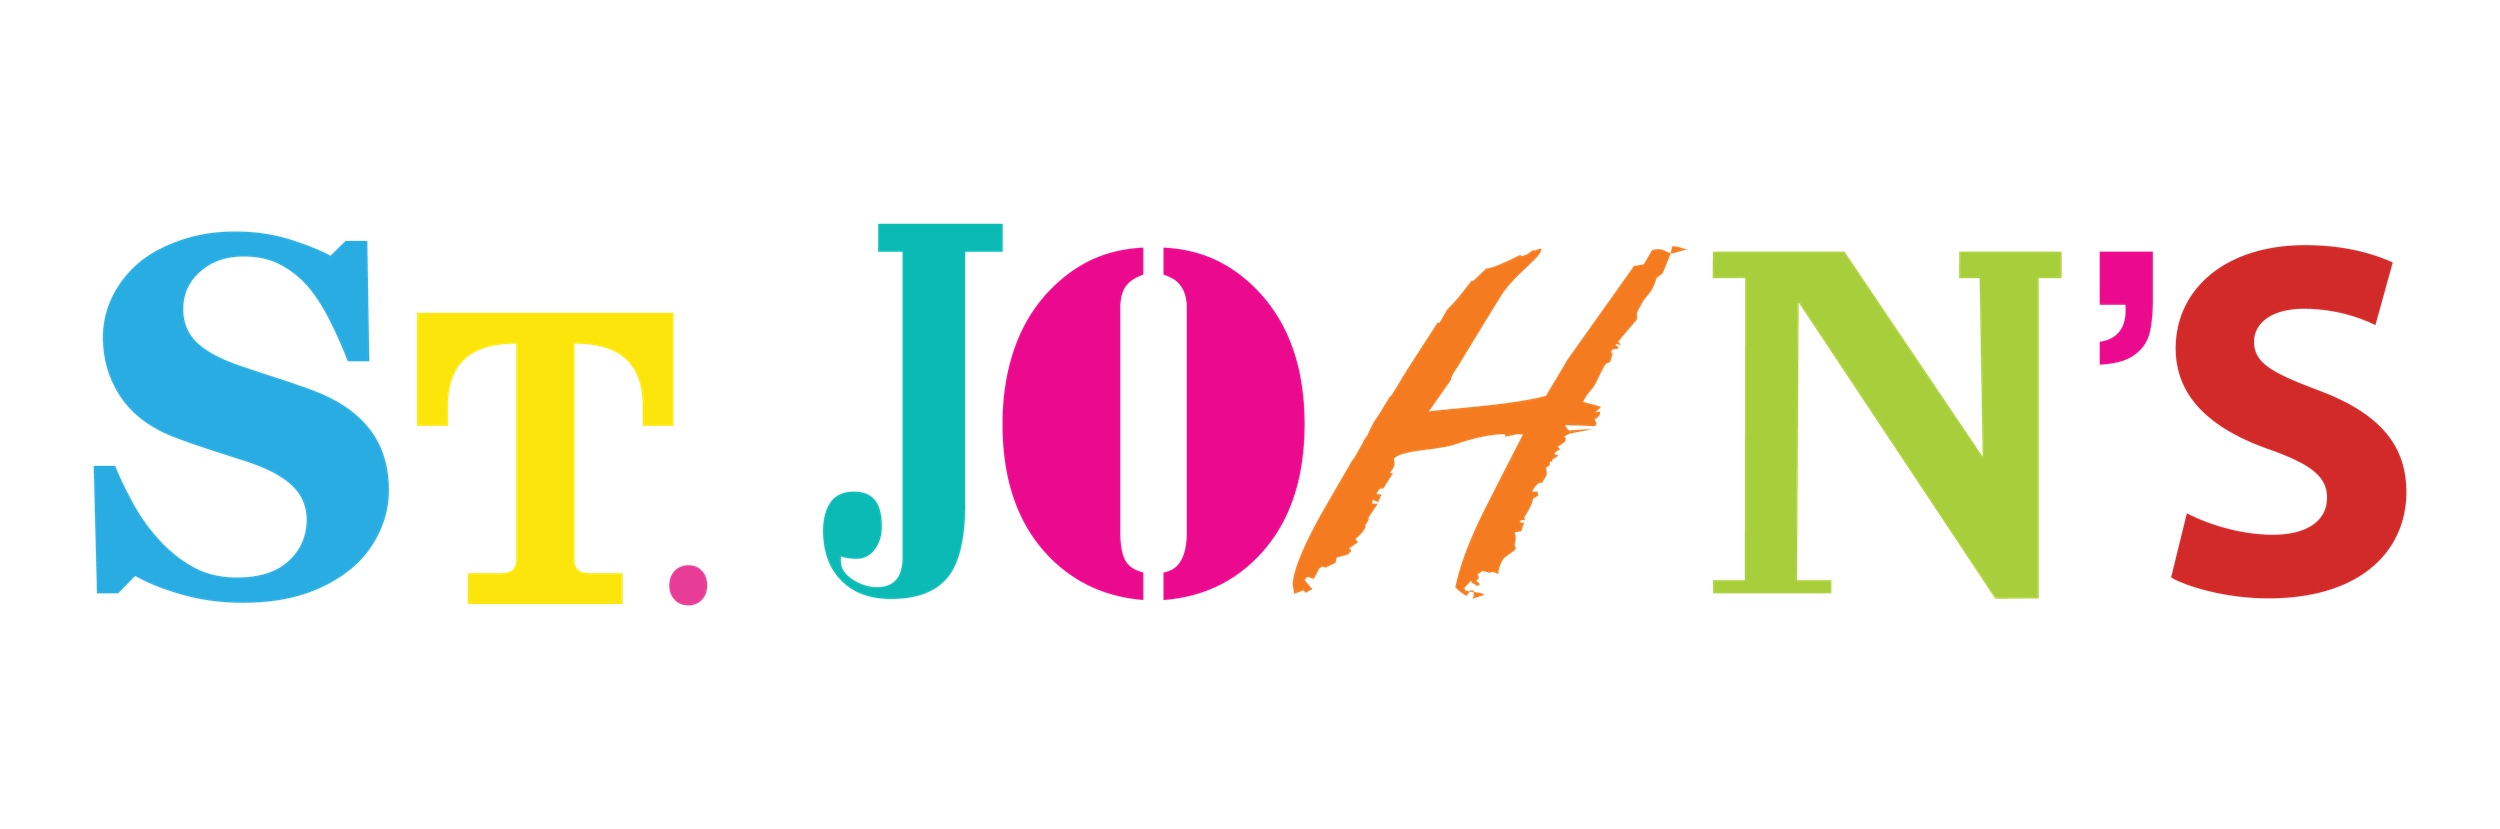 St Johns Shopping Centre logo